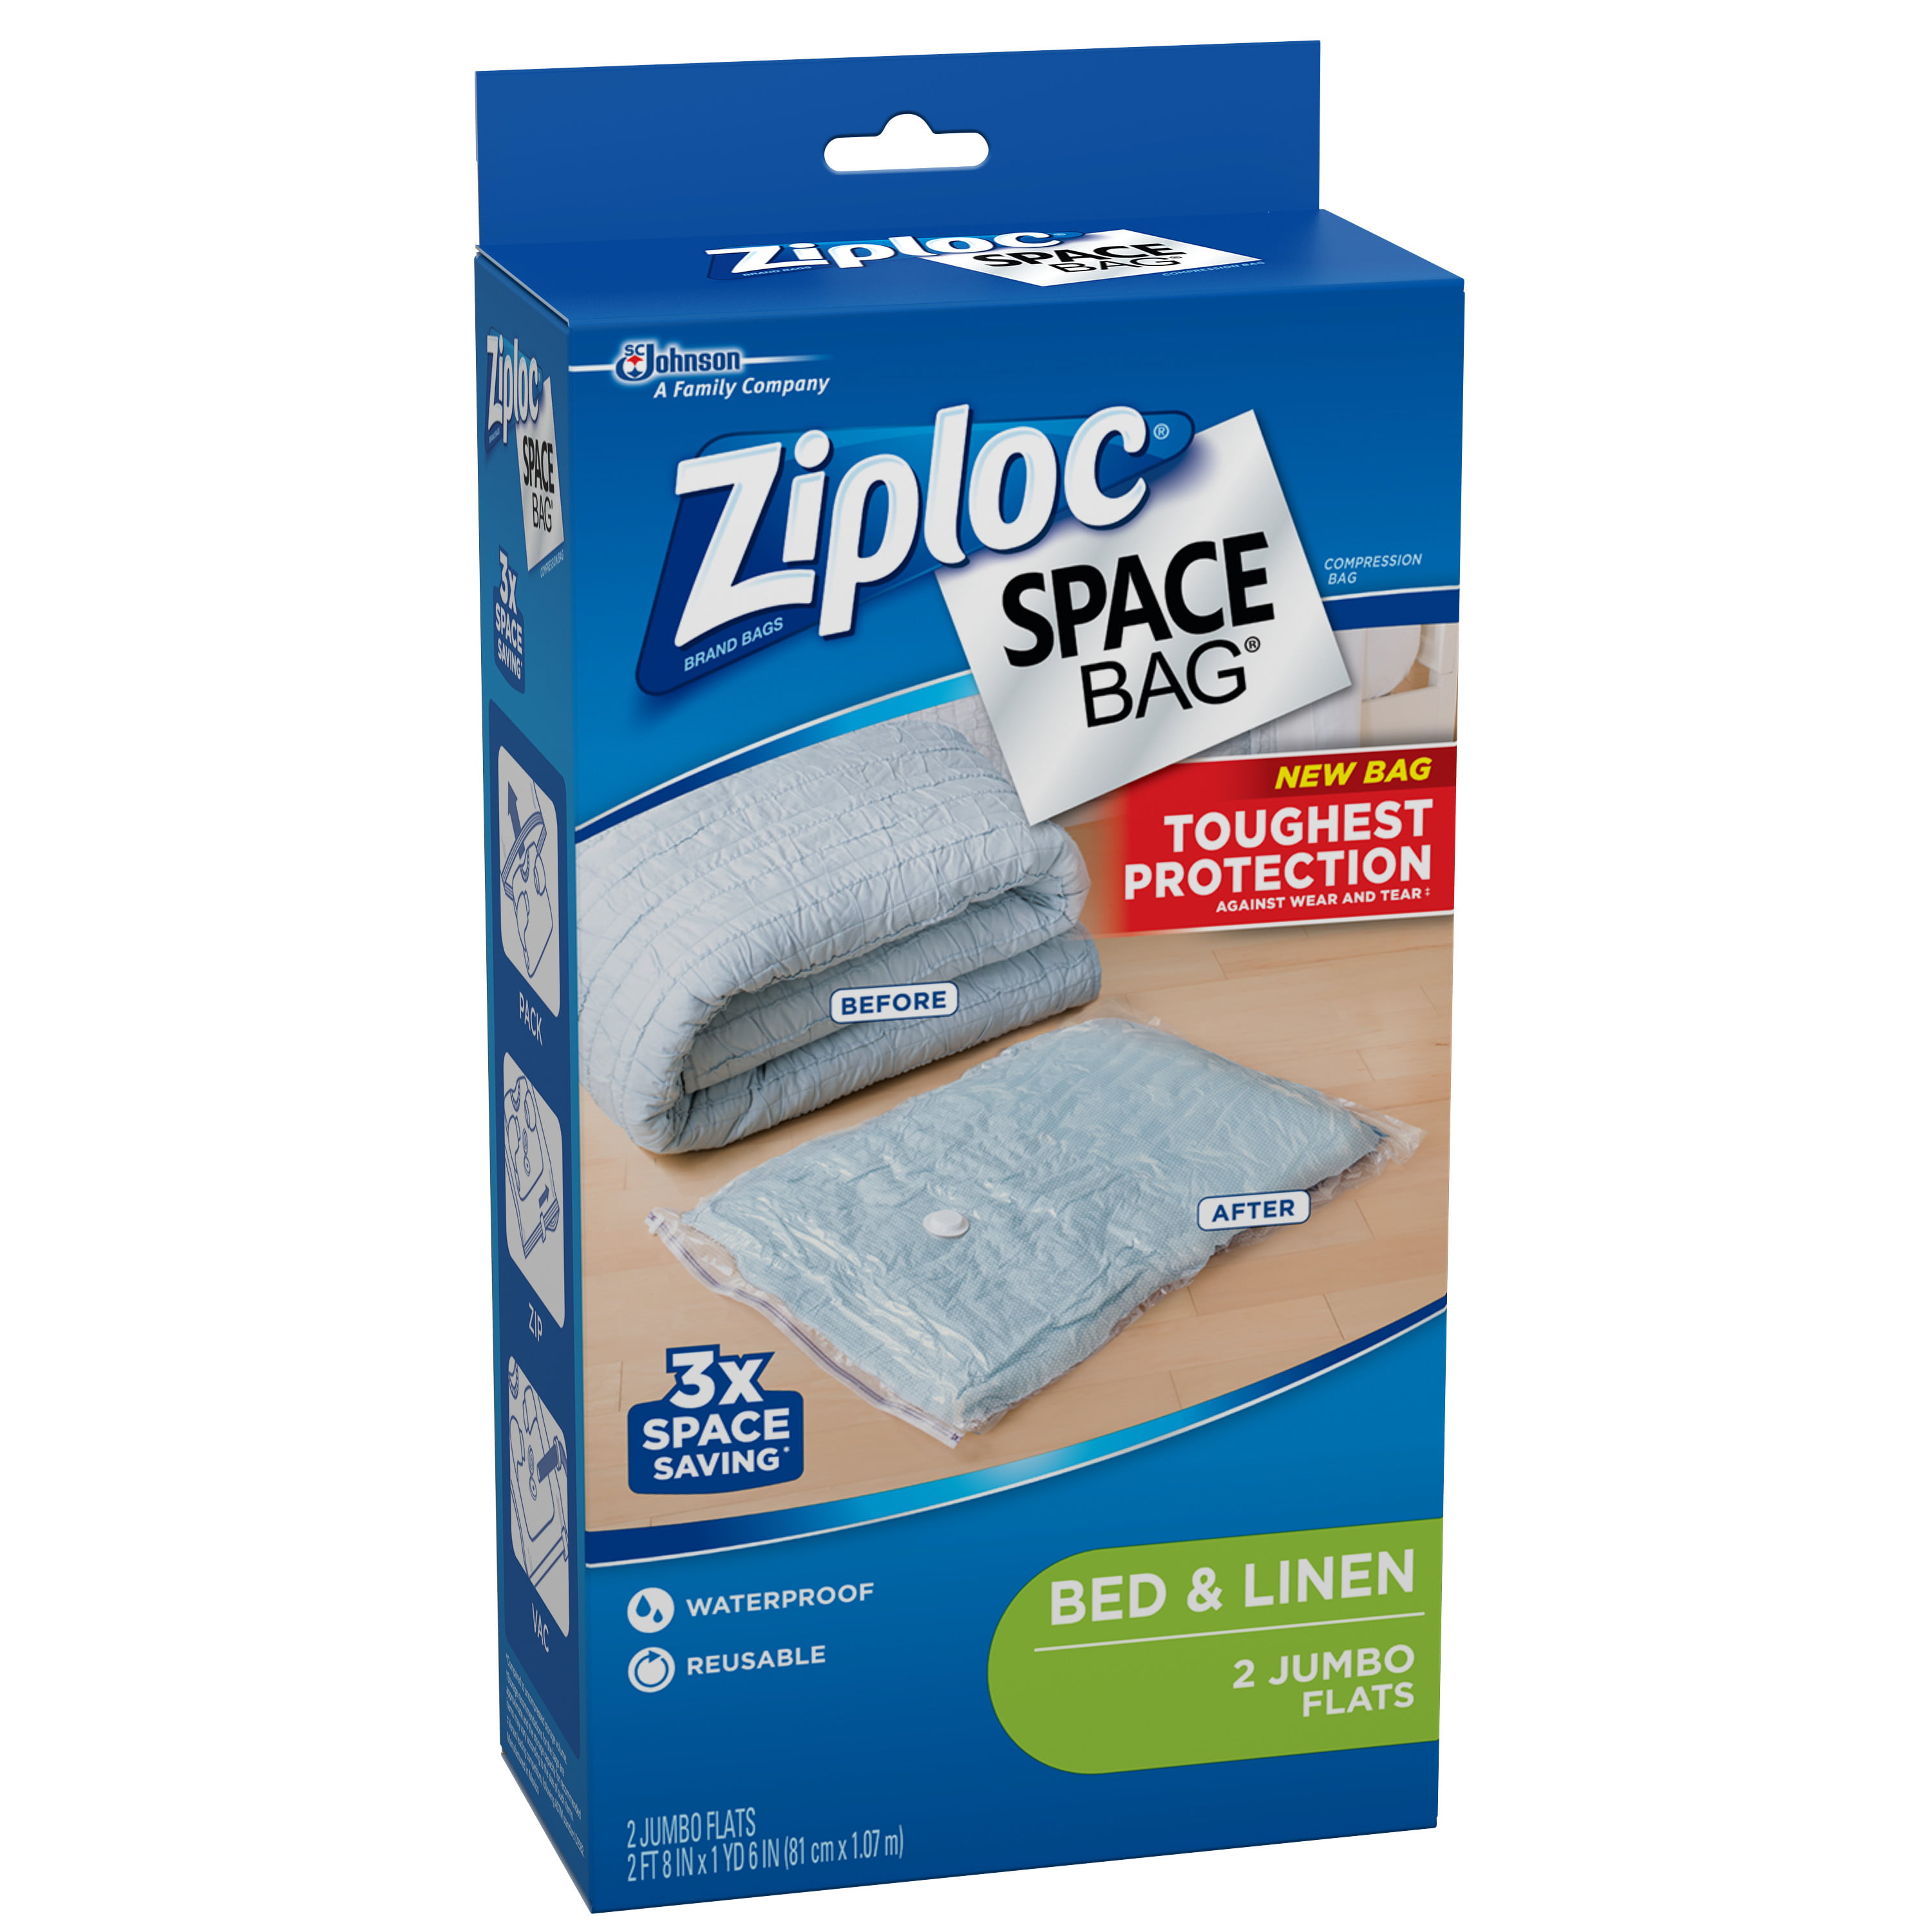 ziploc space bags bed and linen